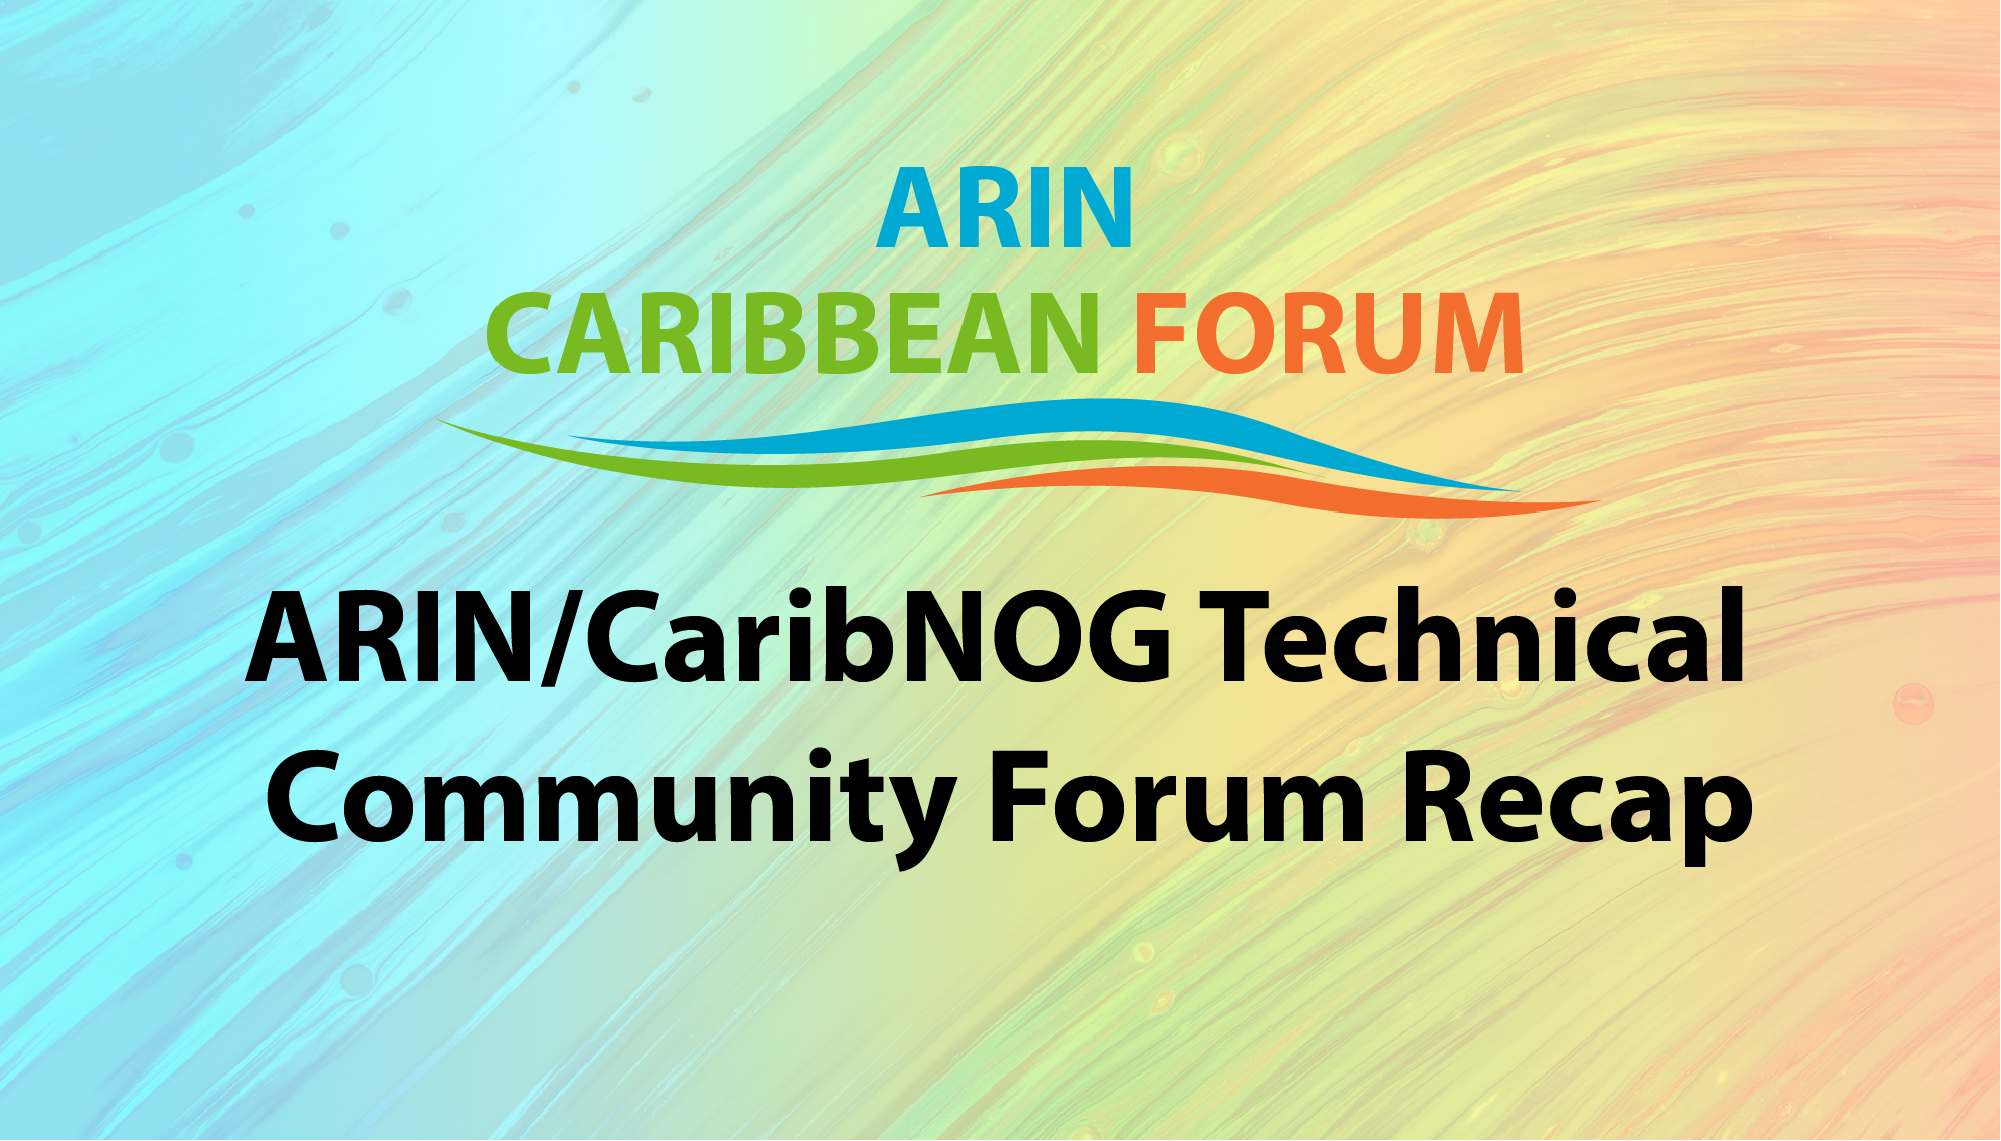 Read the blog ARIN/CaribNOG Technical Community Forum Recap